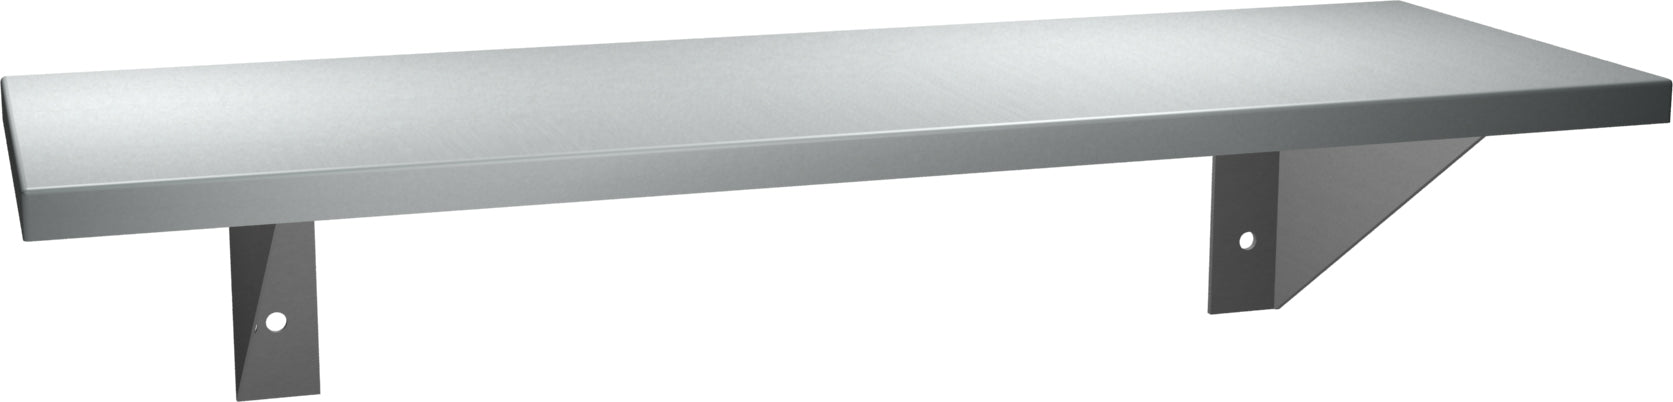 ASI 0692-518 Shelf, Stainless Steel, 5 X 18 Inch